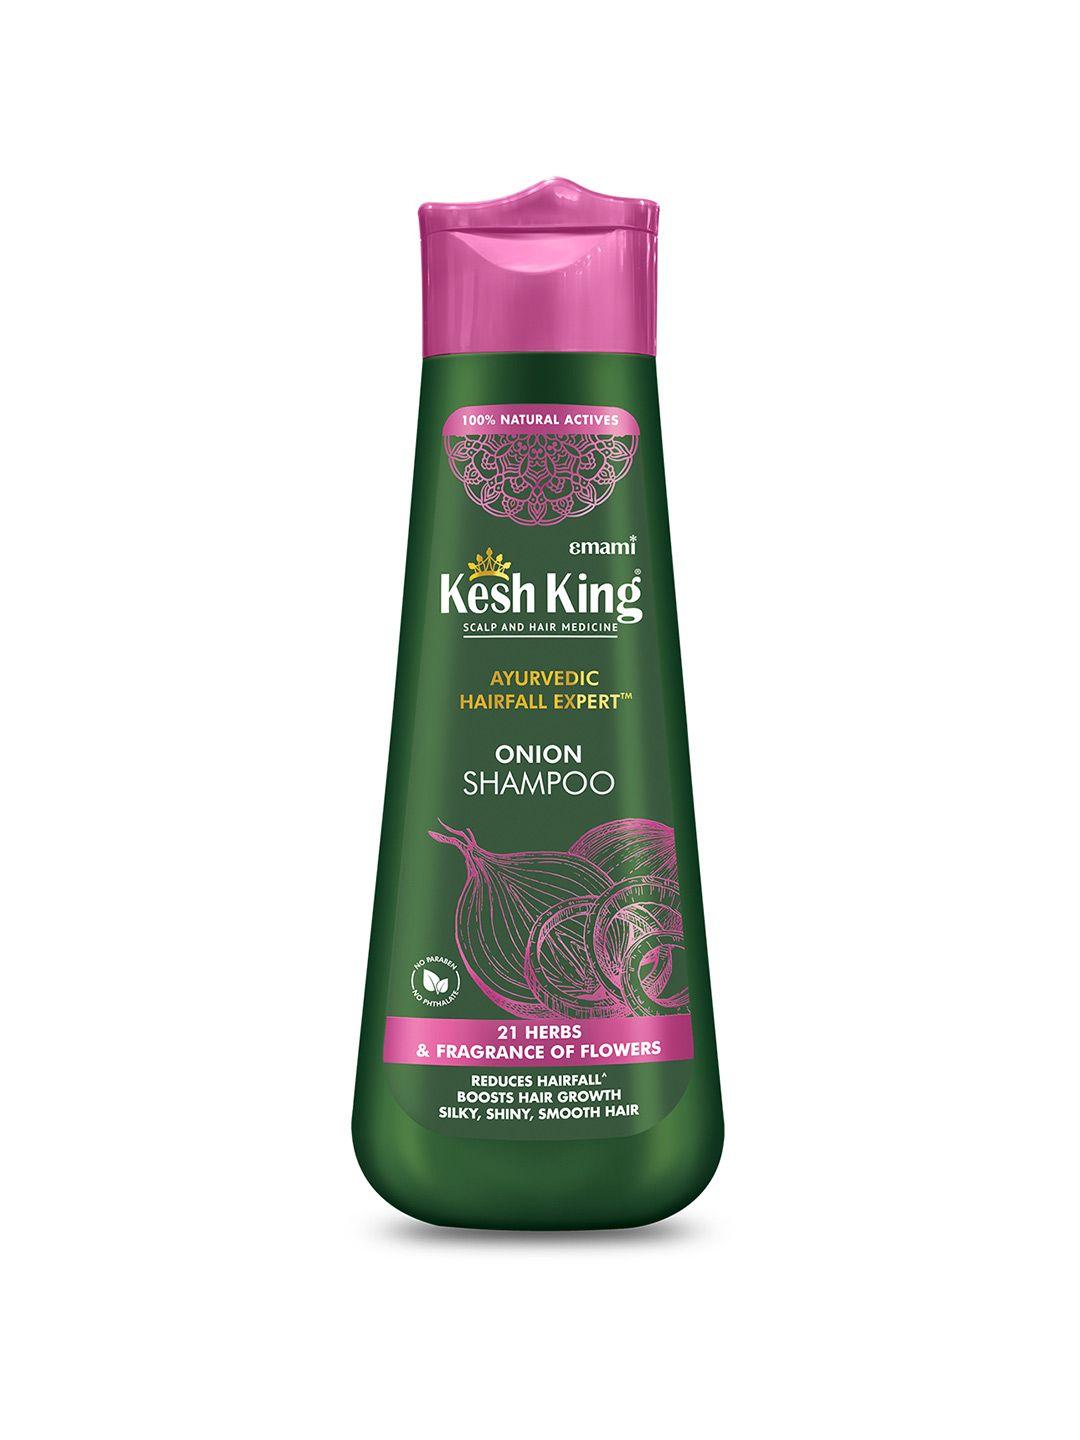 kesh king scalp & hair medicine ayurvedic hairfall expert onion shampoo - 300 ml